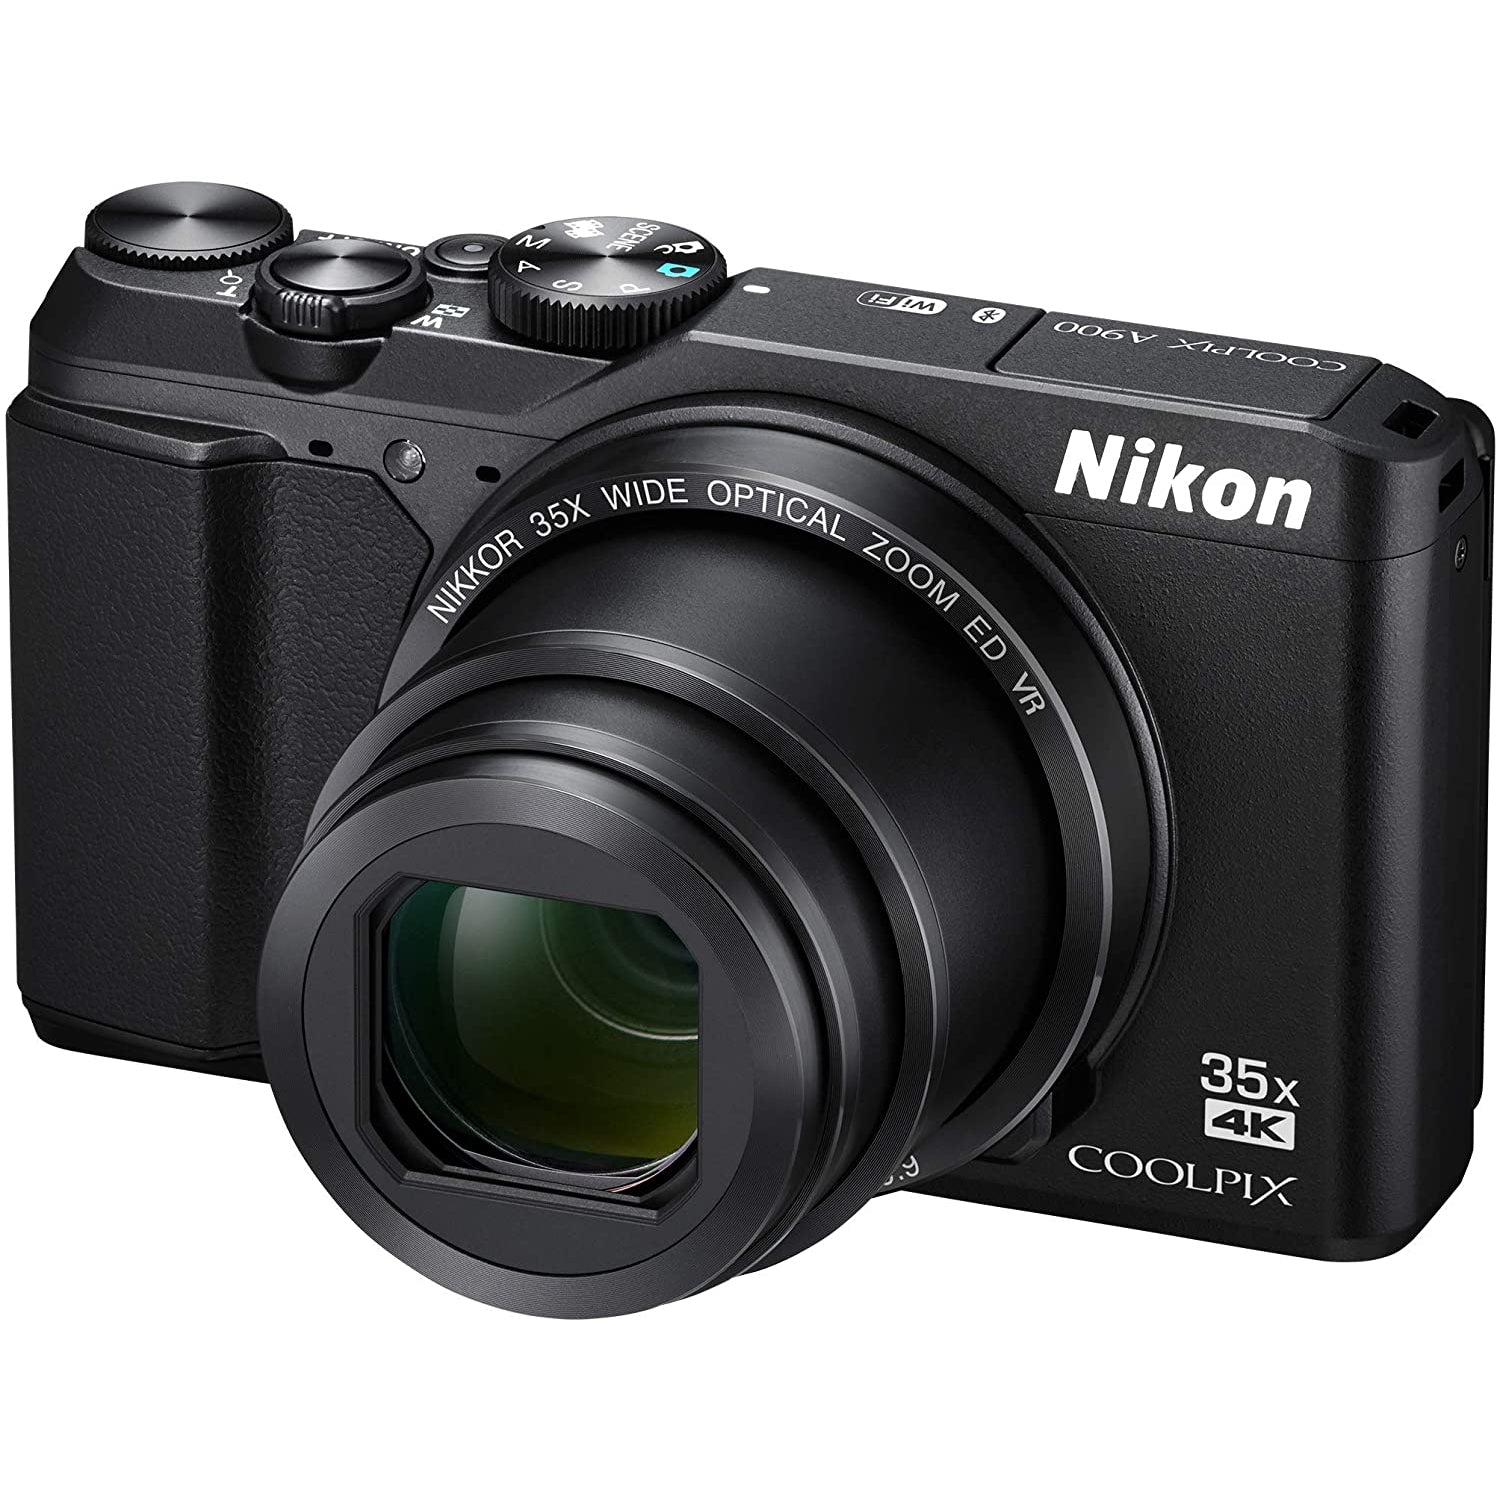 Nikon Coolpix A900 Compact System Camera - Black